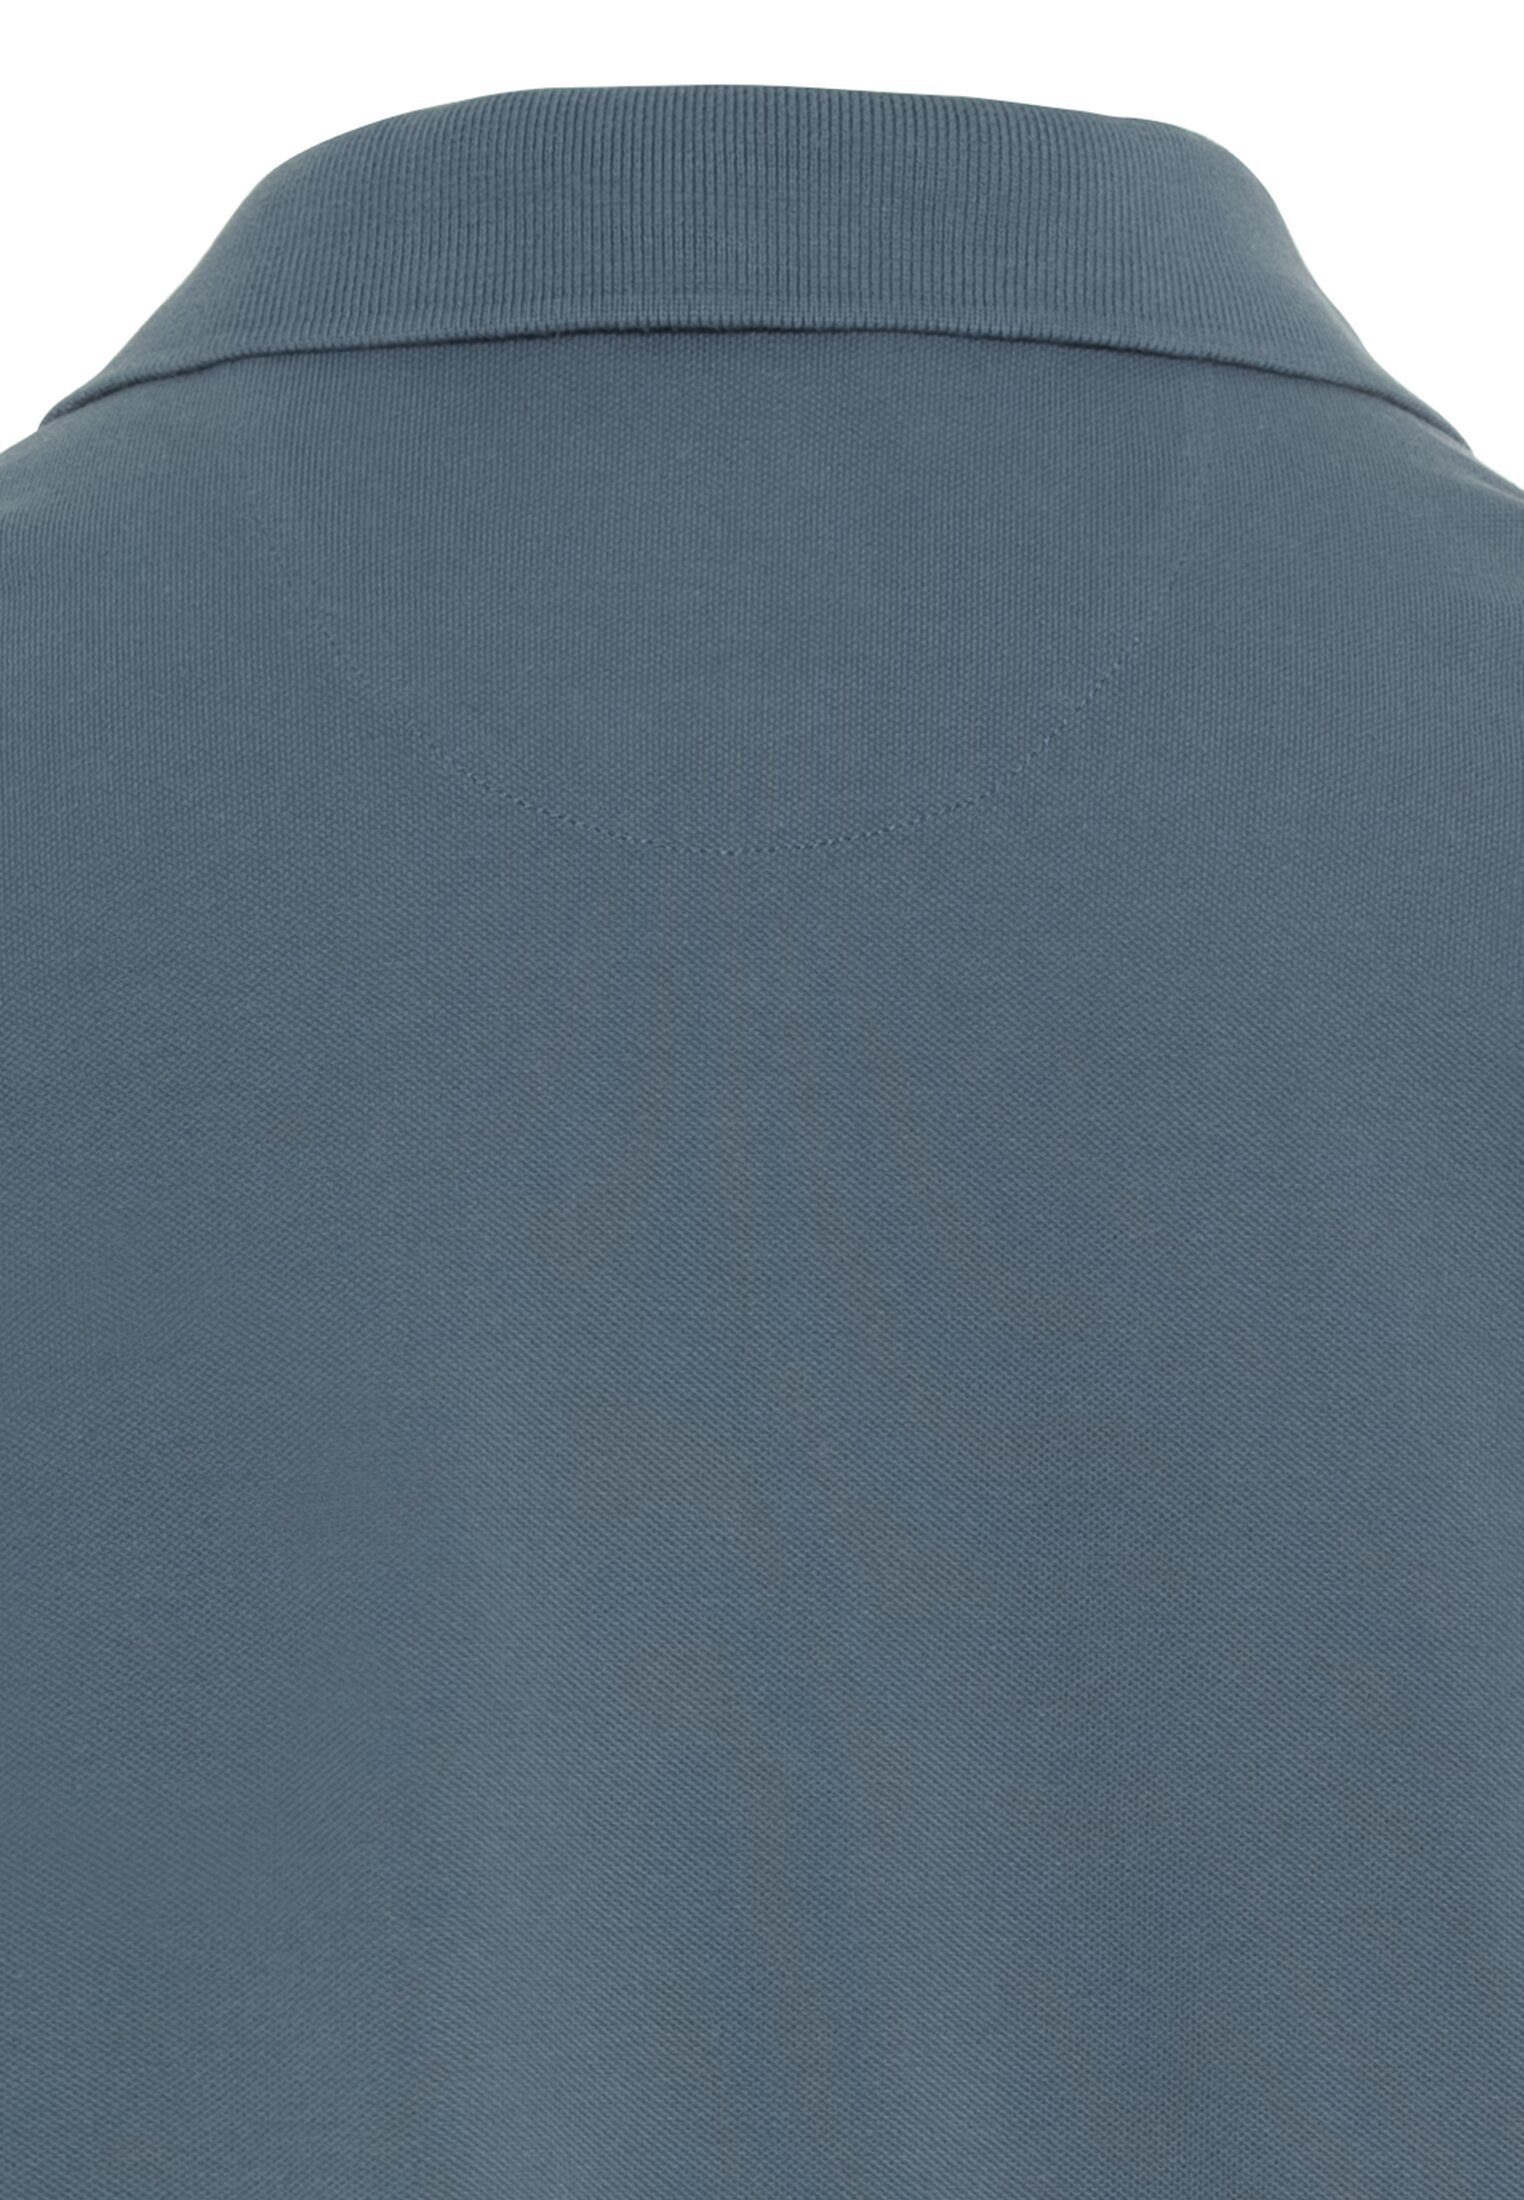 active reiner Baumwolle Blau aus Shirts_Poloshirt Poloshirt camel